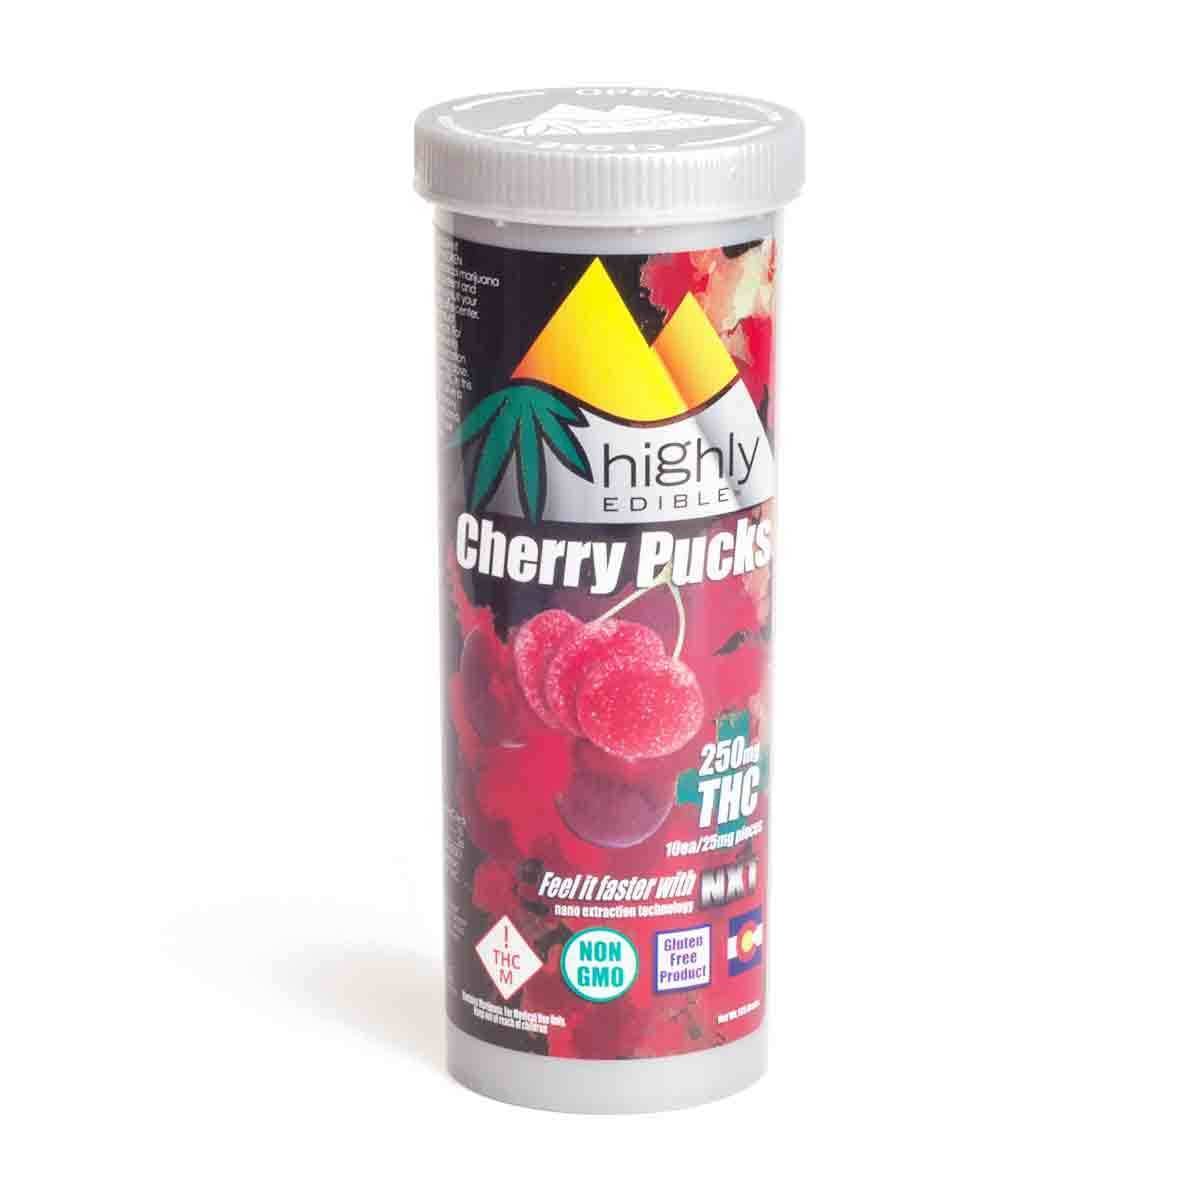 edible-highly-edible-cherry-puck-250mg-med-co